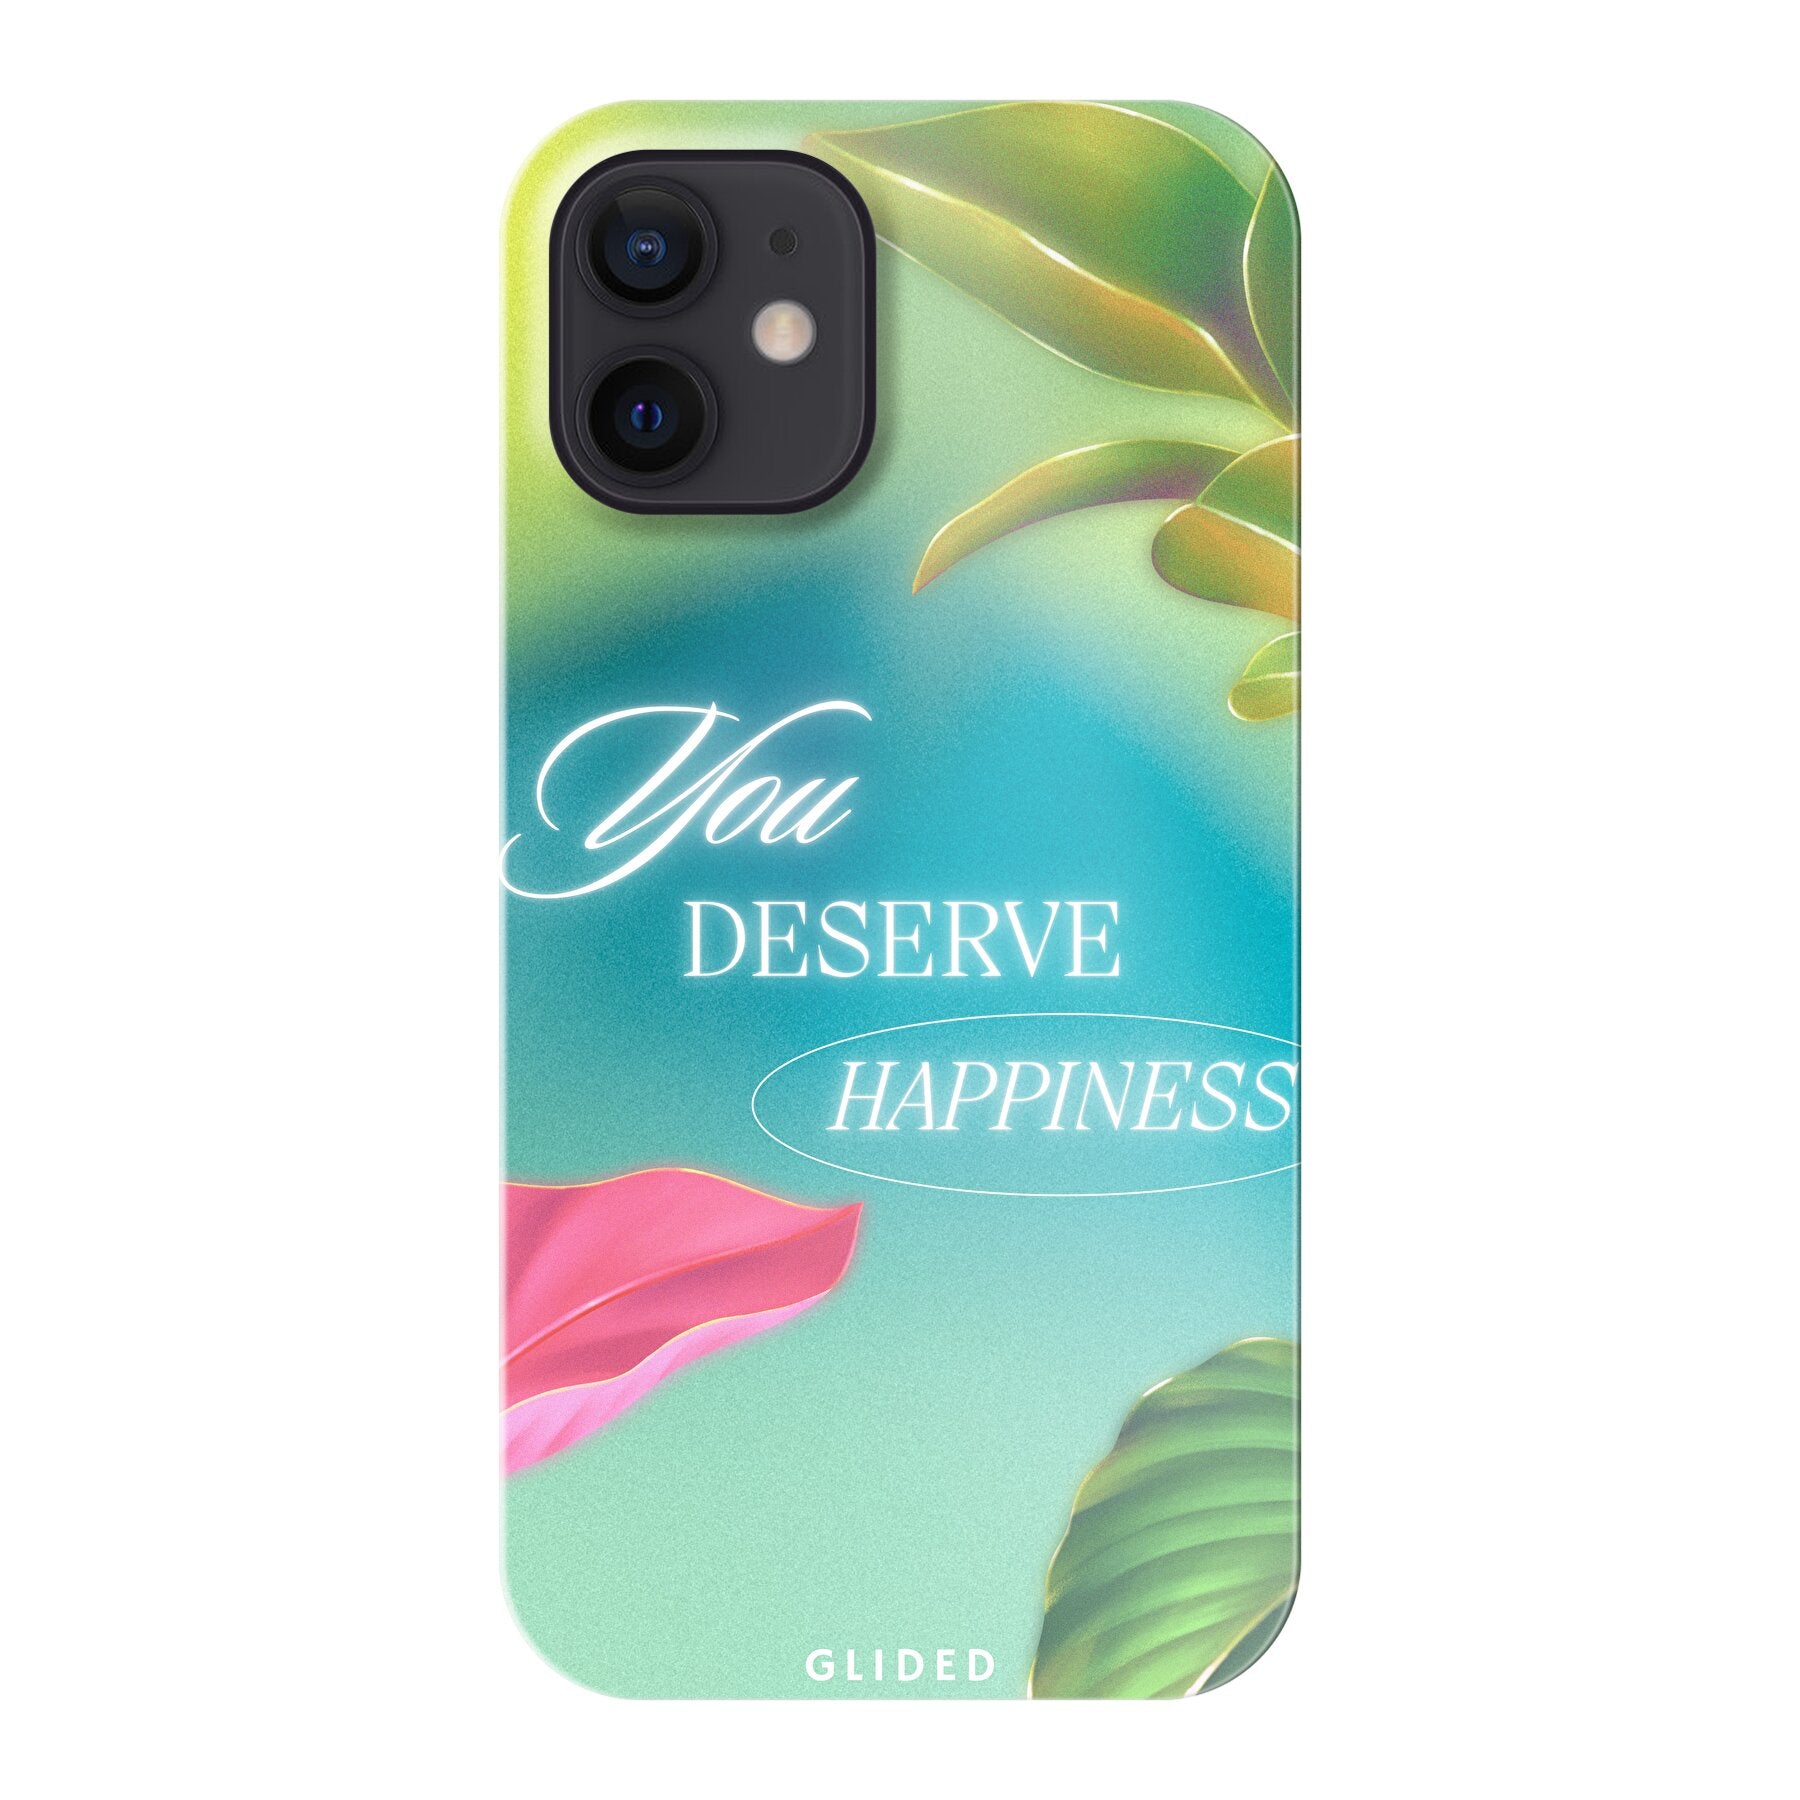 Happiness - iPhone 12 mini - Hard Case